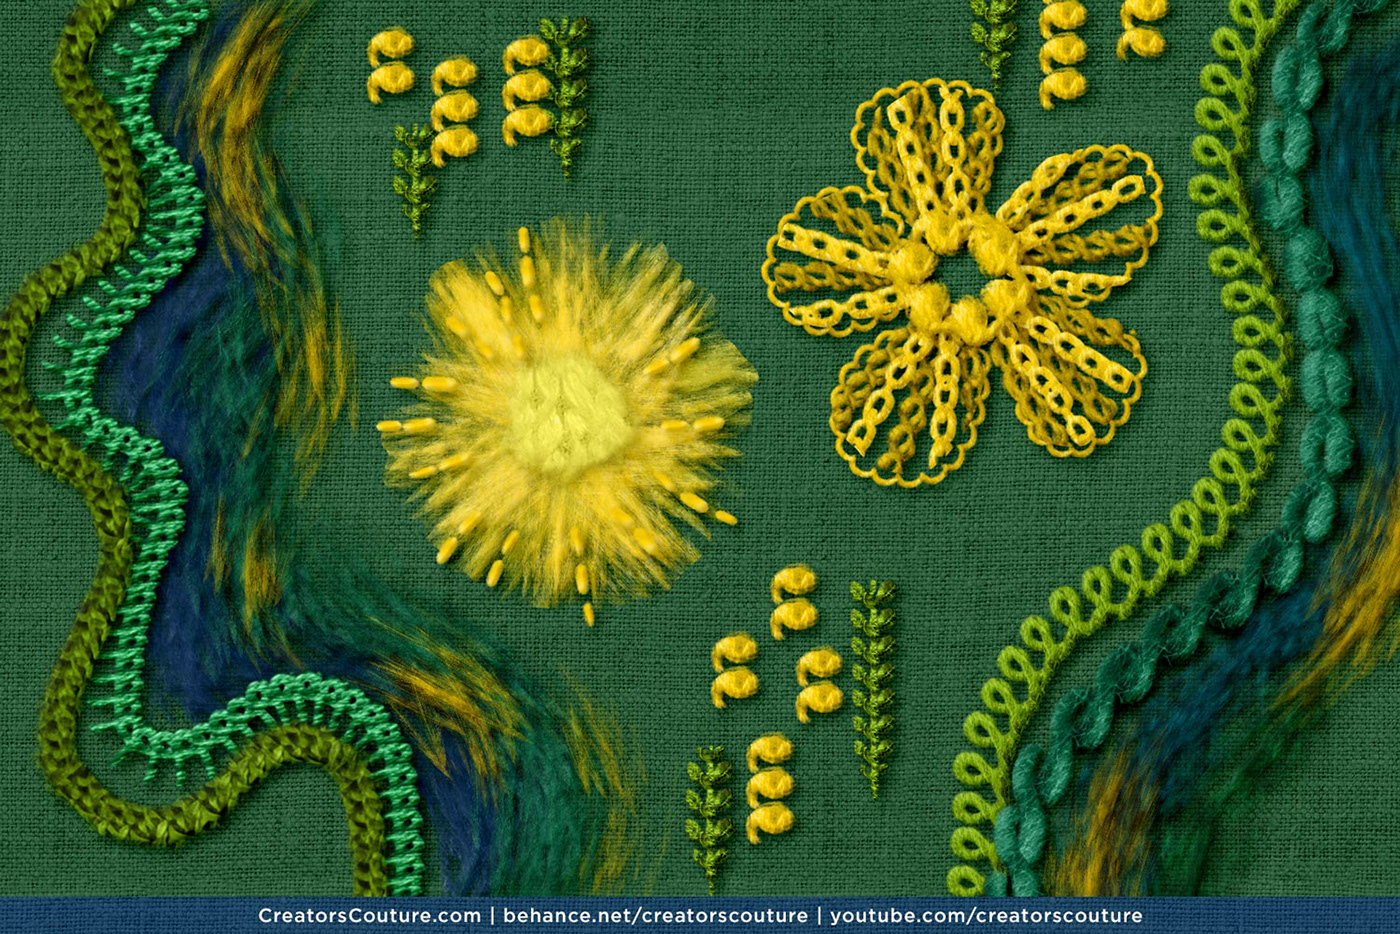 Embroidery thread surface design Surface Pattern Digital Art  ILLUSTRATION  Photoshop brush brushes brush lettering